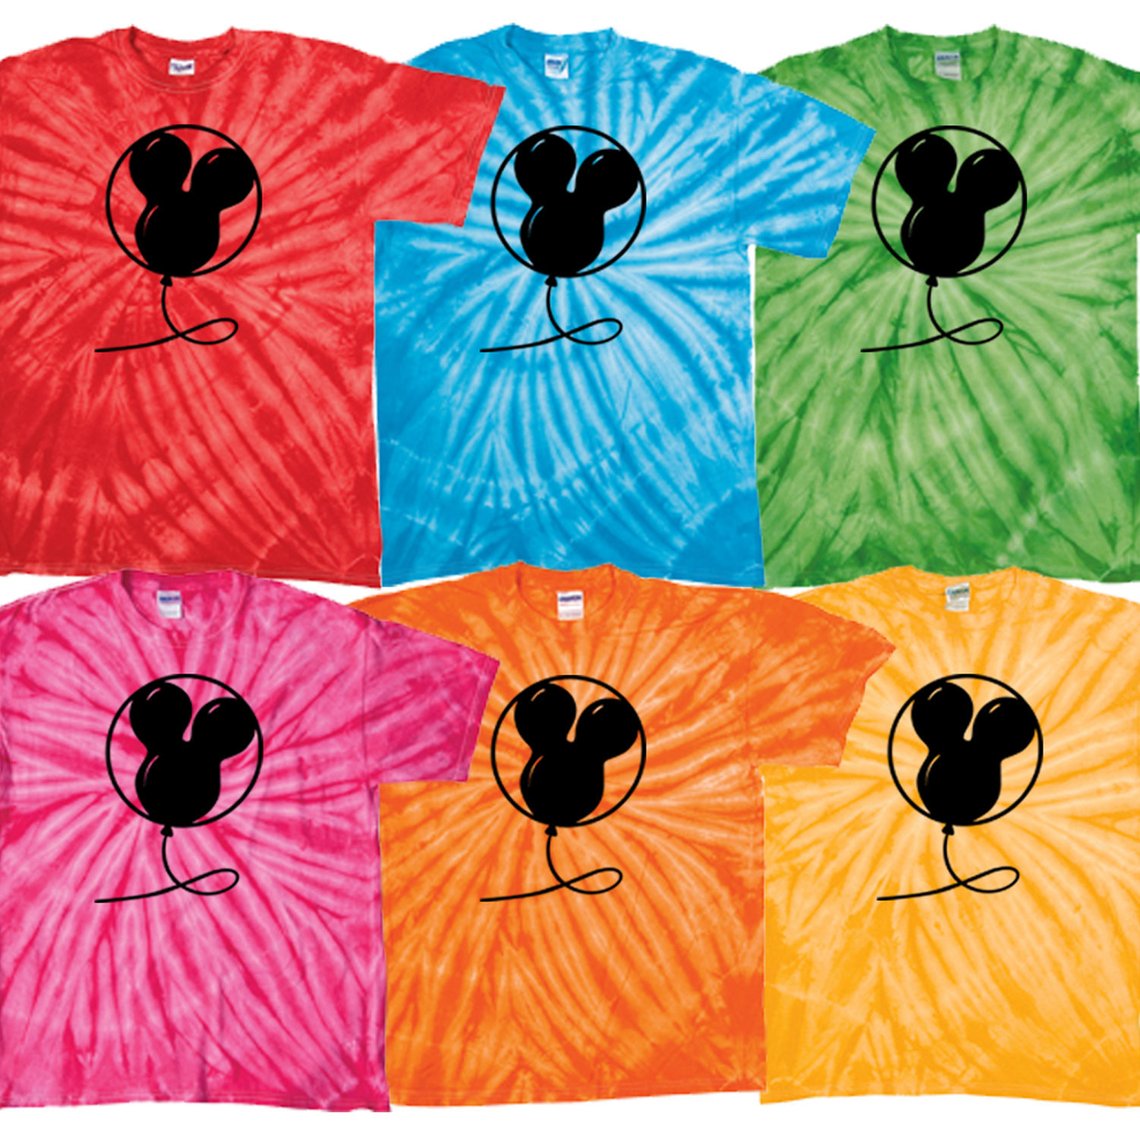 Disney Matching Shirt - Disney Vacation Shirt - Mickey Mouse Shirt - Disney Tie Dye Shirt